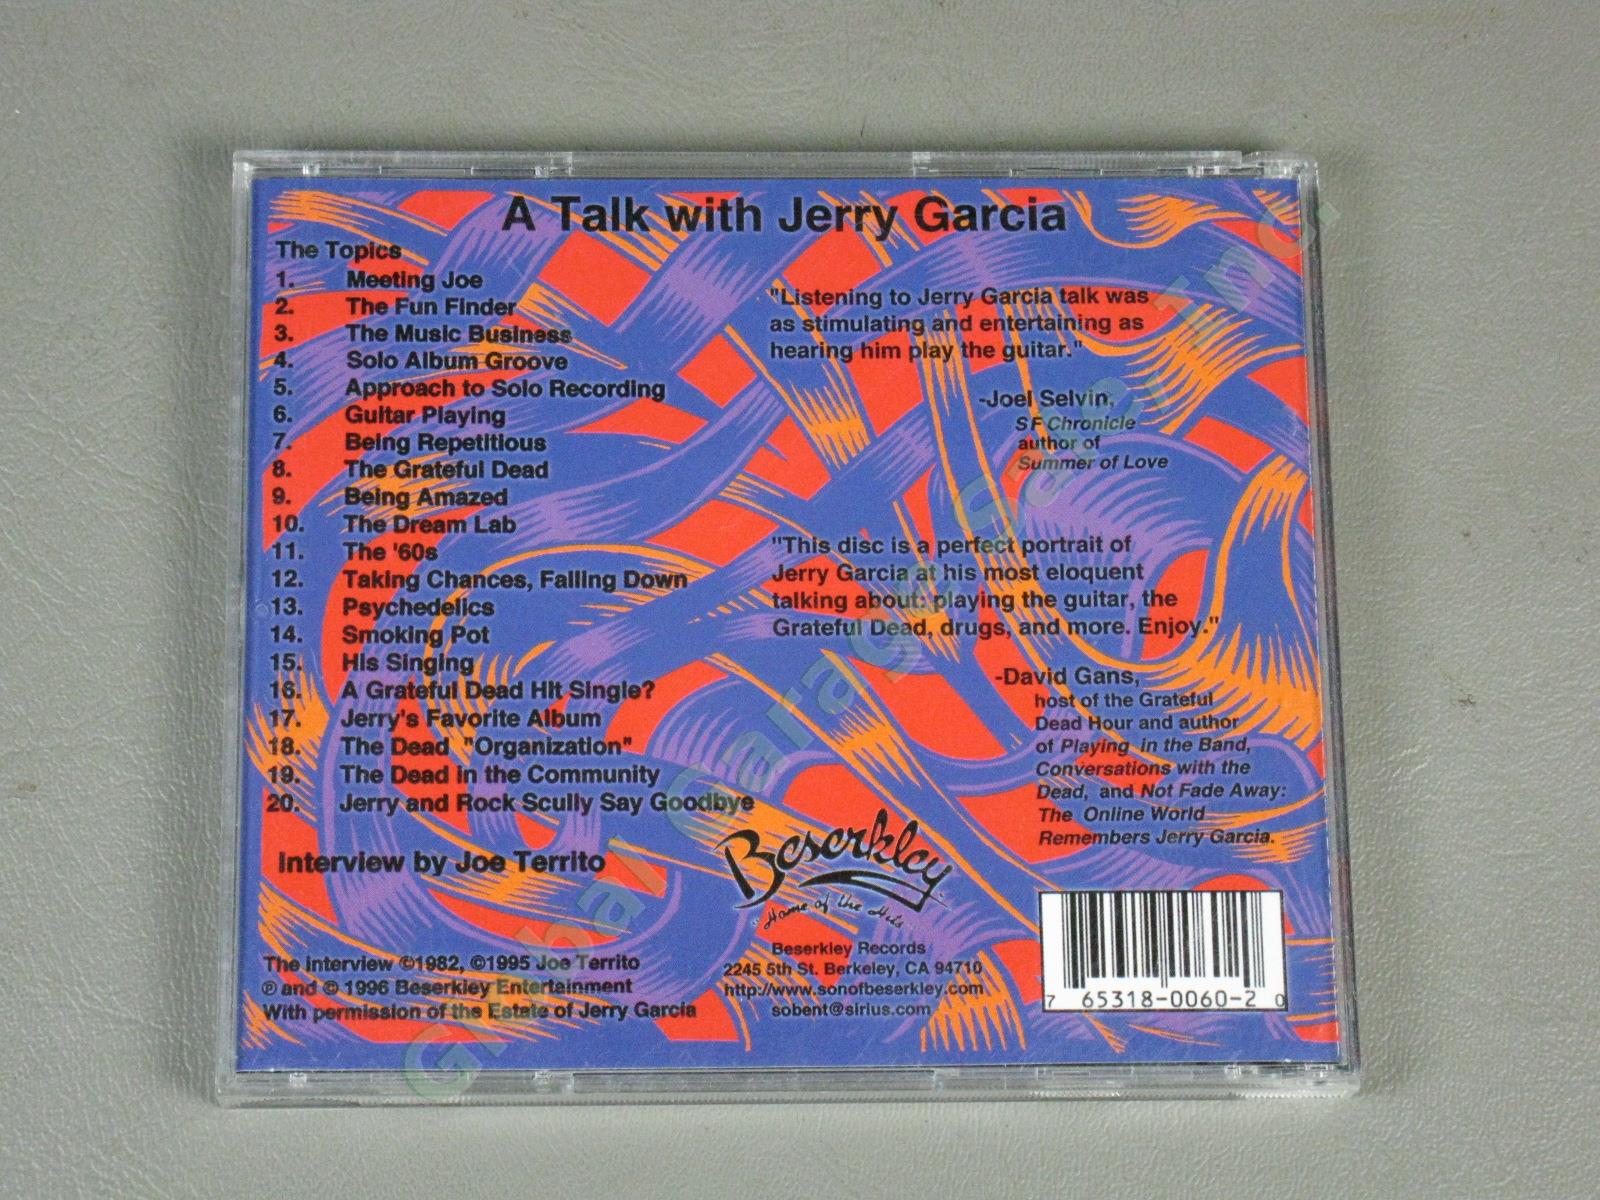 Vtg 1990s Grateful Dead Live Unreleased Show Concert Import CD VHS Lot 16 Discs 20